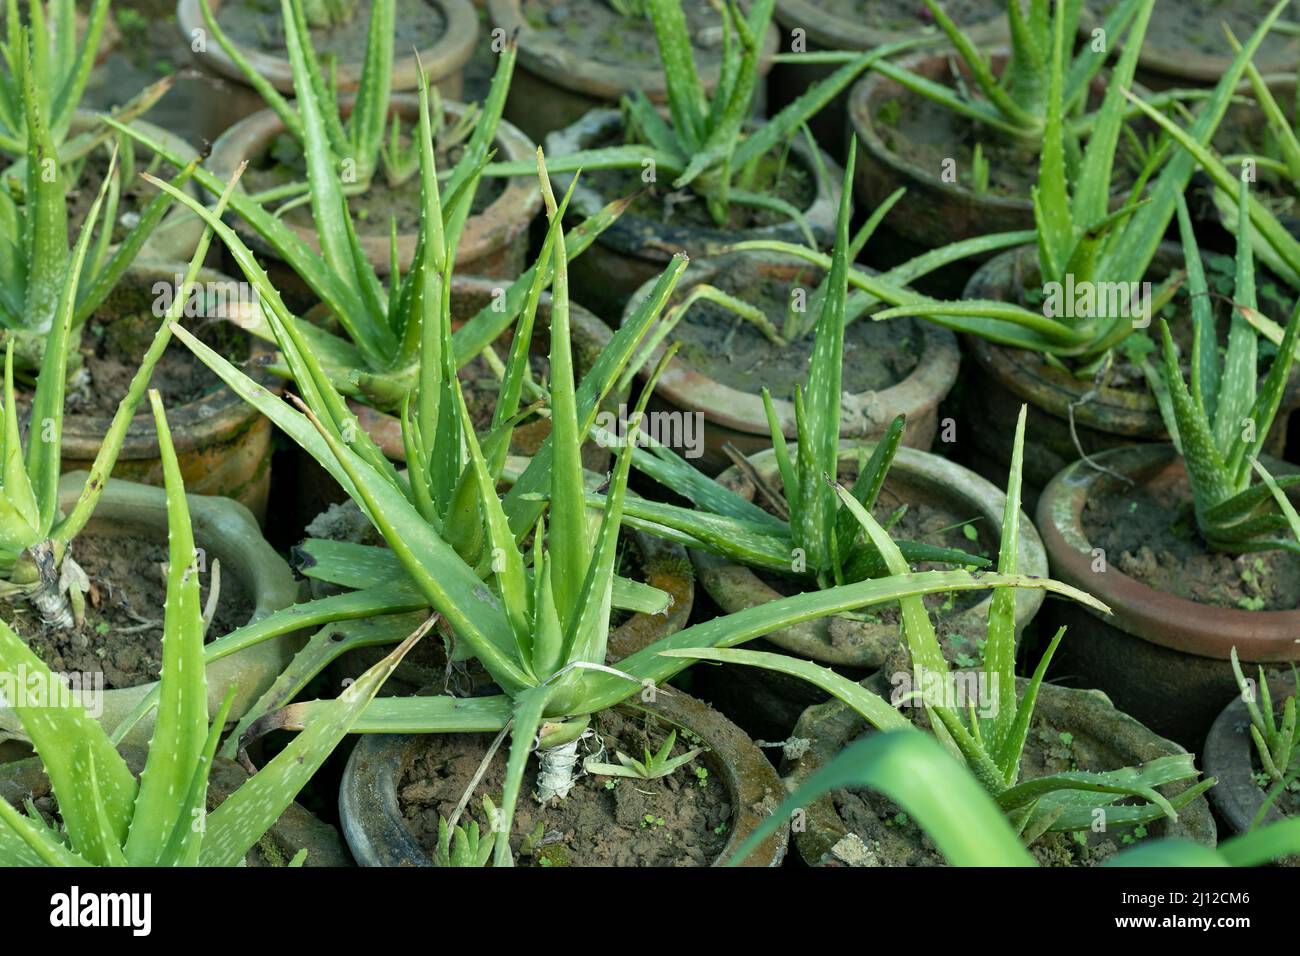 Aloe vera plants growing in clay pots Stock Photo